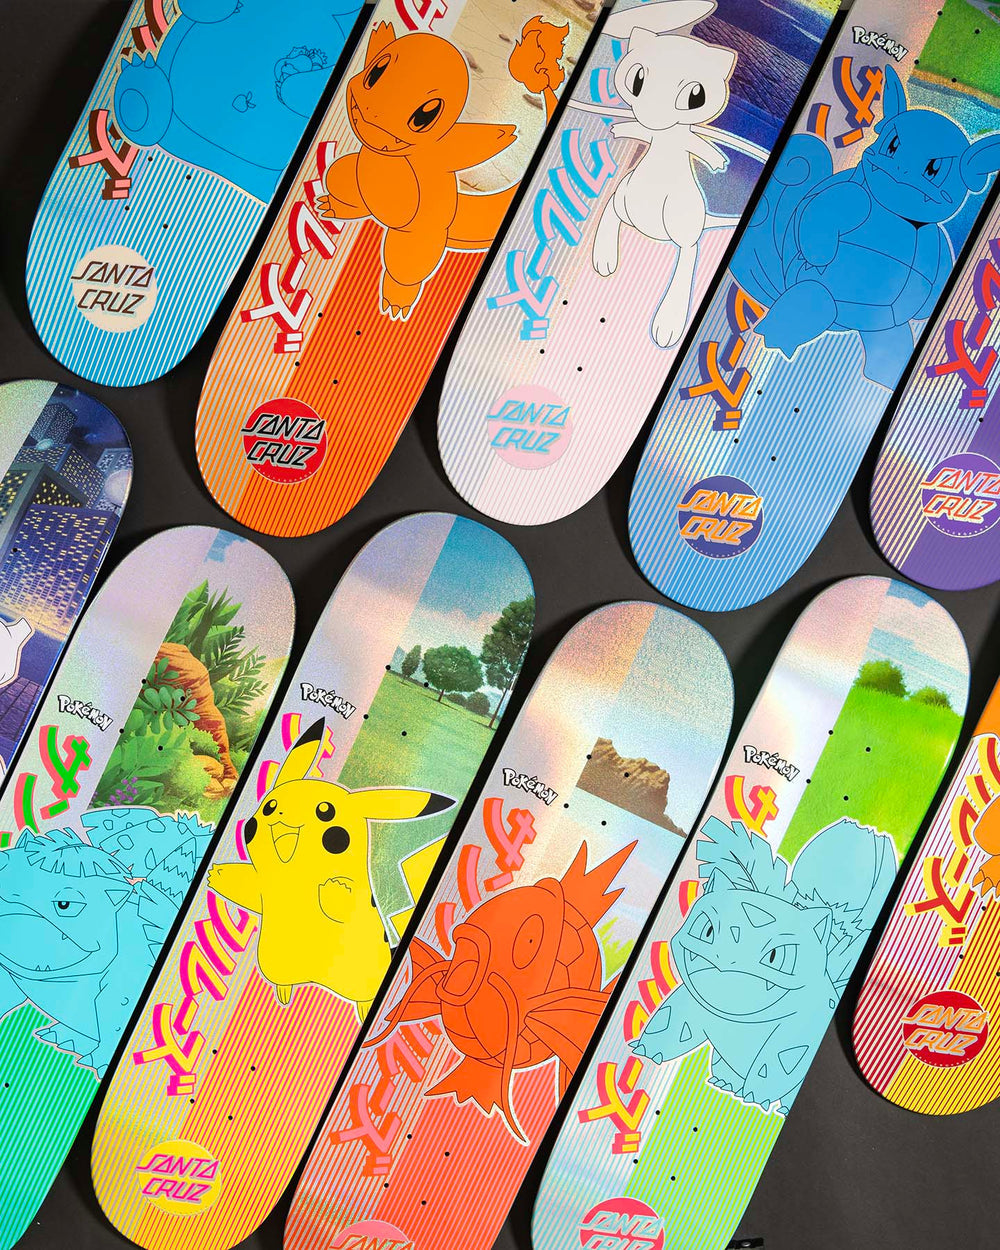 Pokémon x Santa Cruz Collection– Mainland Skate & Surf